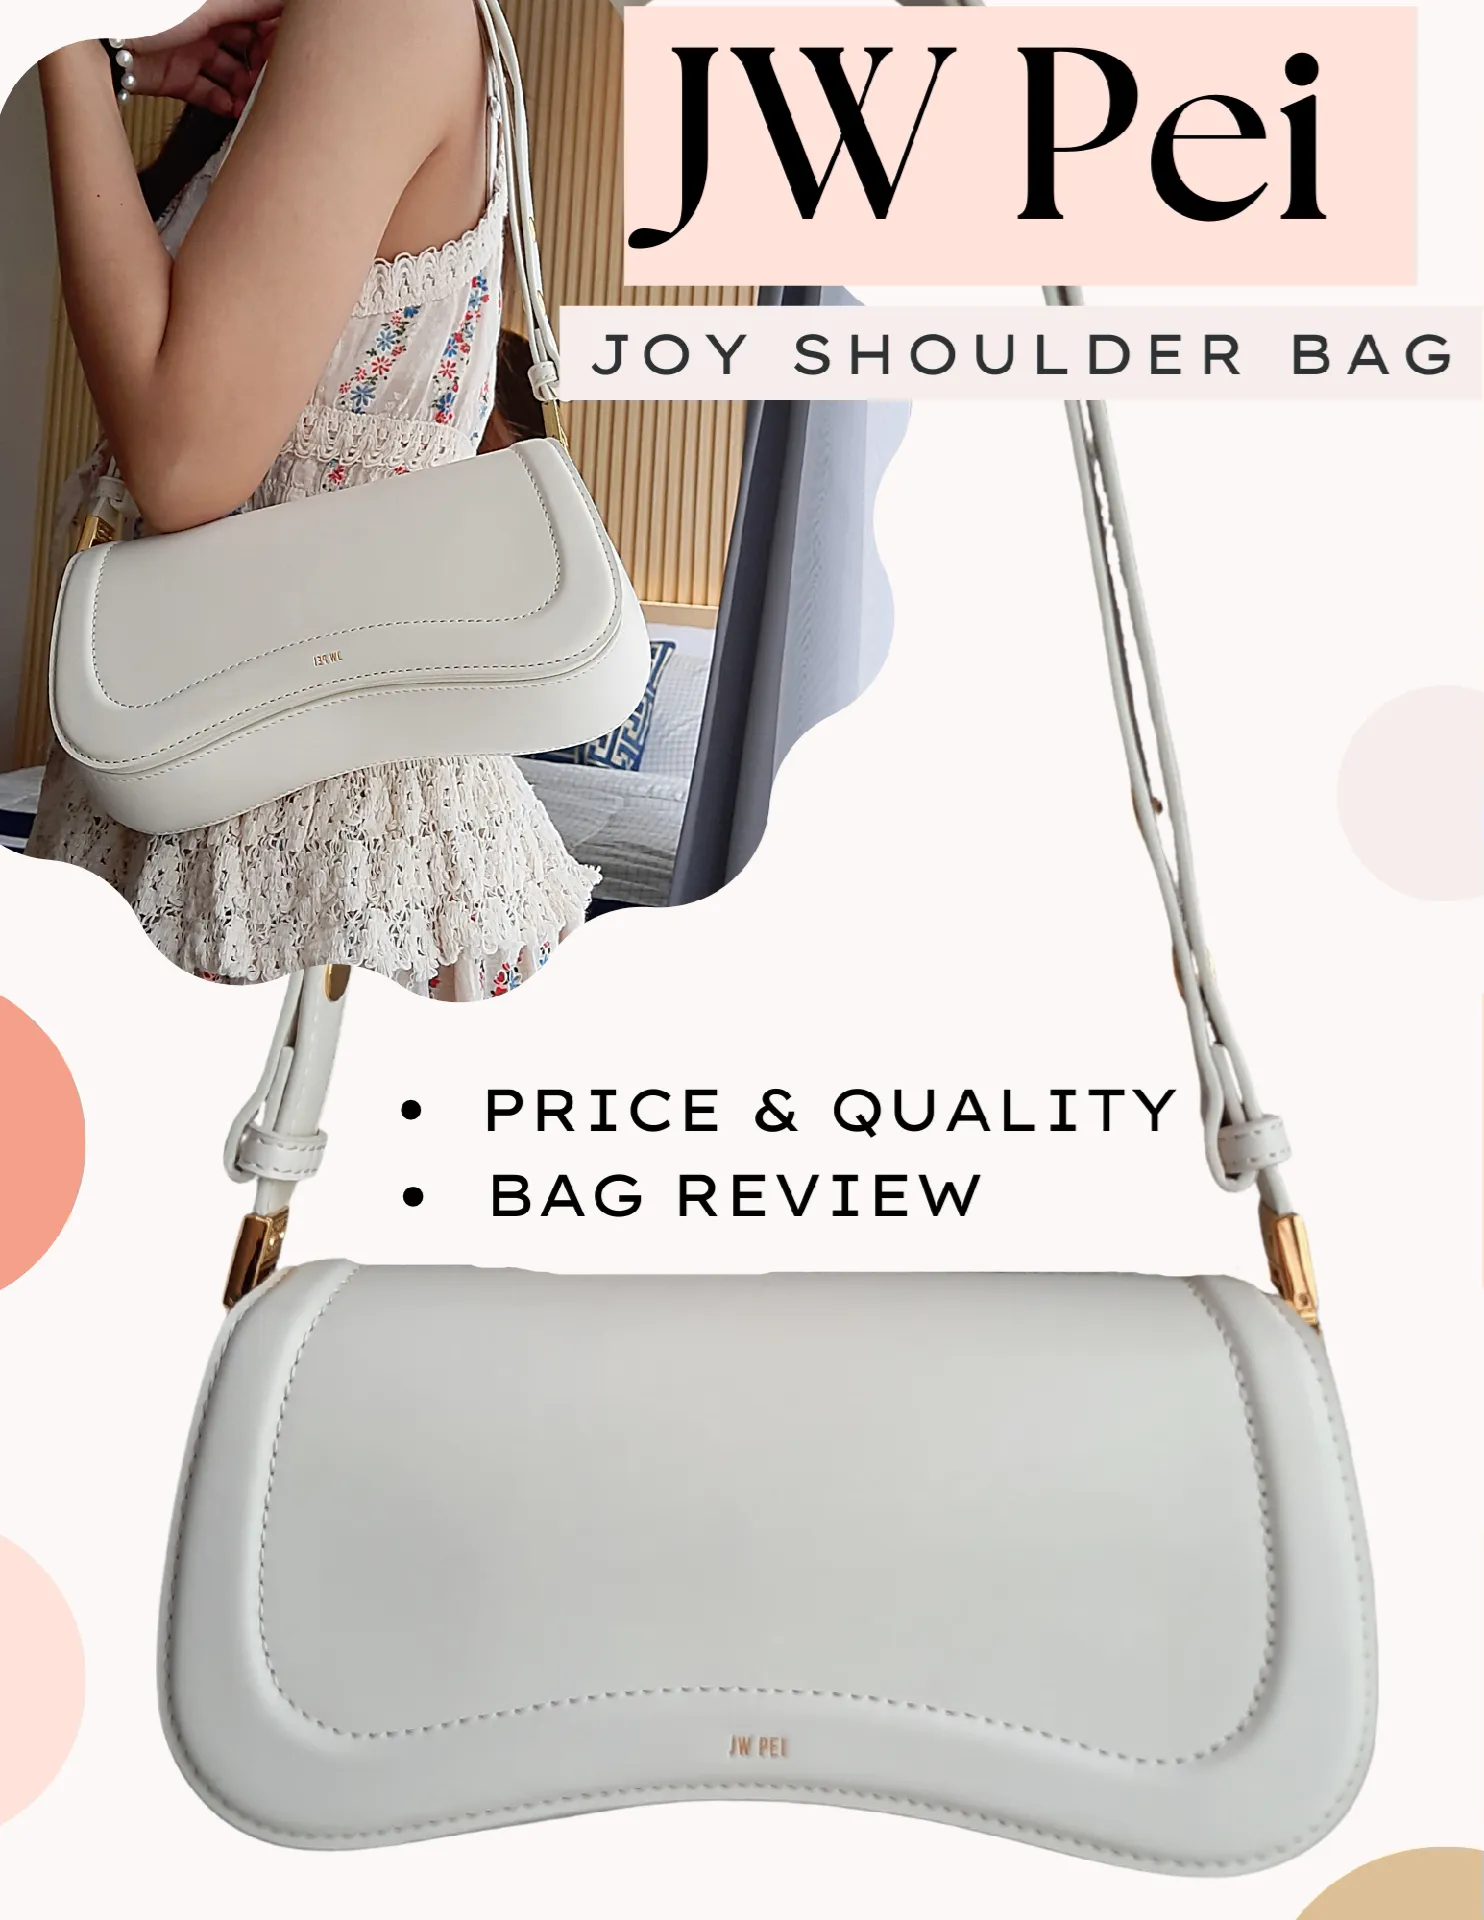 JW Pei Joy Shoulder Bag